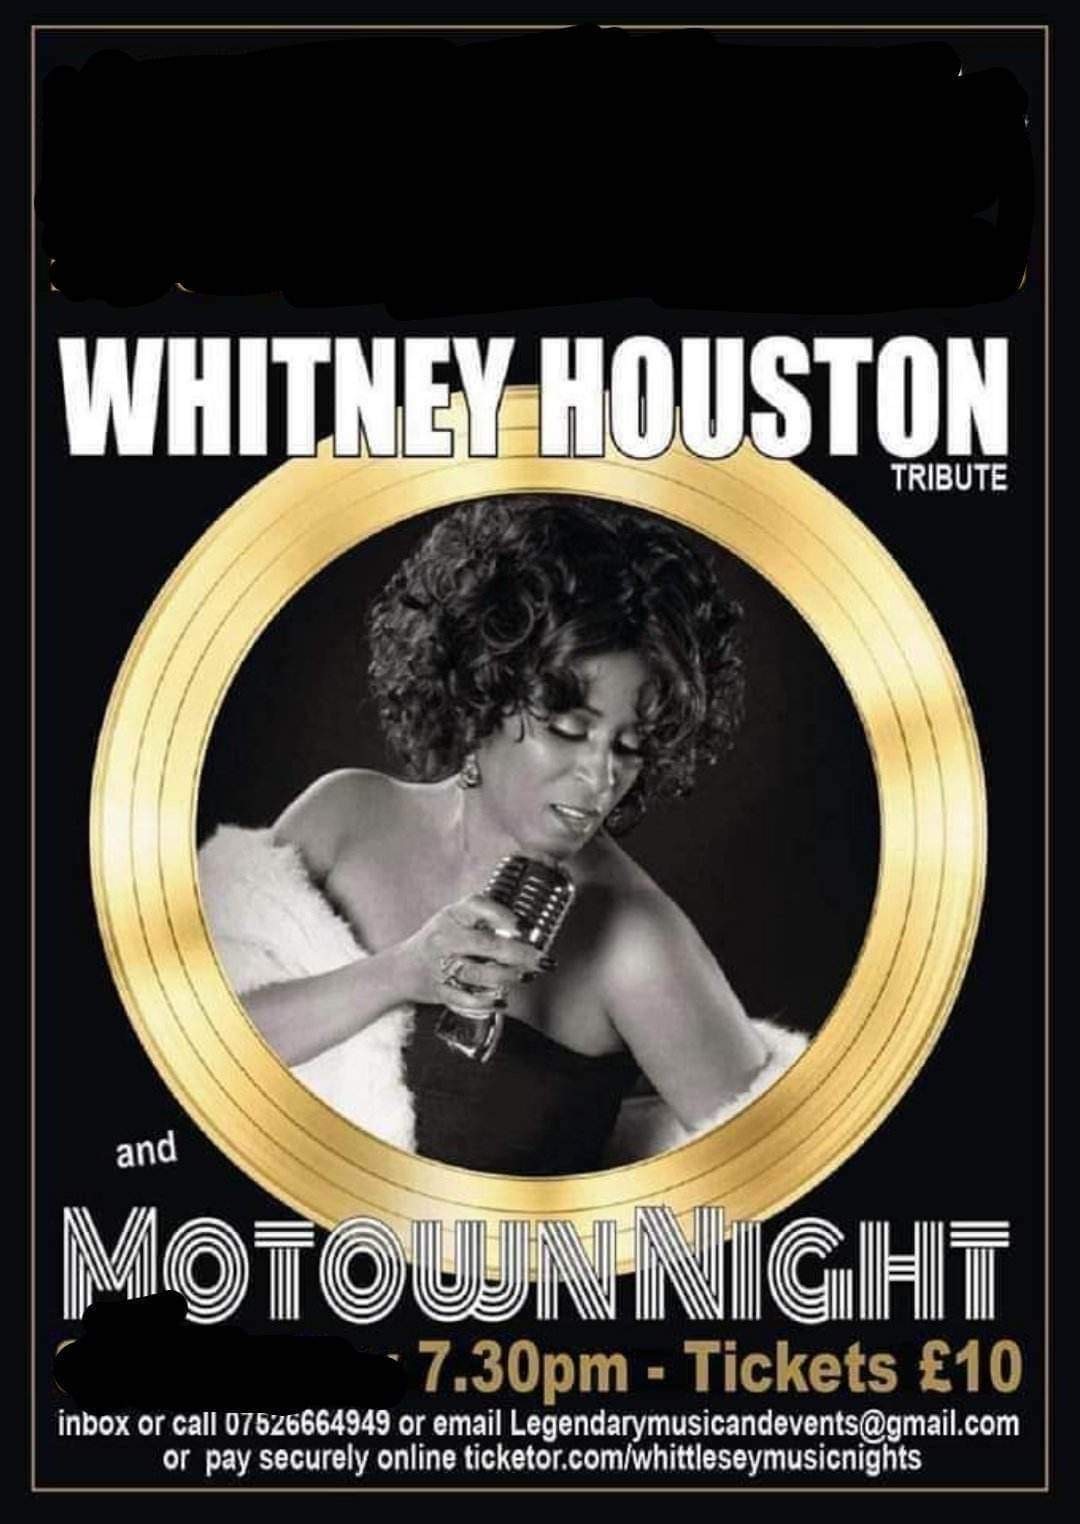 Whitney Houston Tribute Night  on août 19, 19:30@Leverington Sports and Social Club - Achetez des billets et obtenez des informations surwhittlesey music nights 